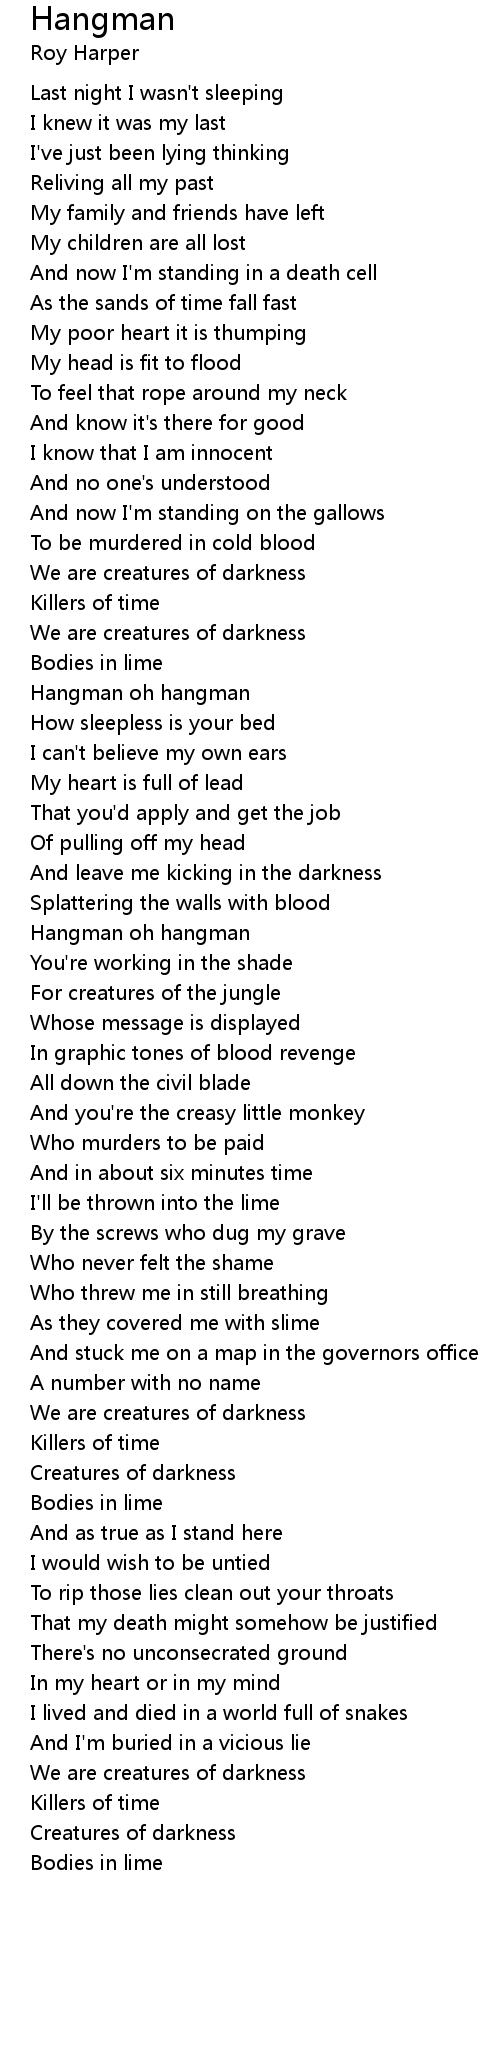 Hangman Lyrics - Follow Lyrics